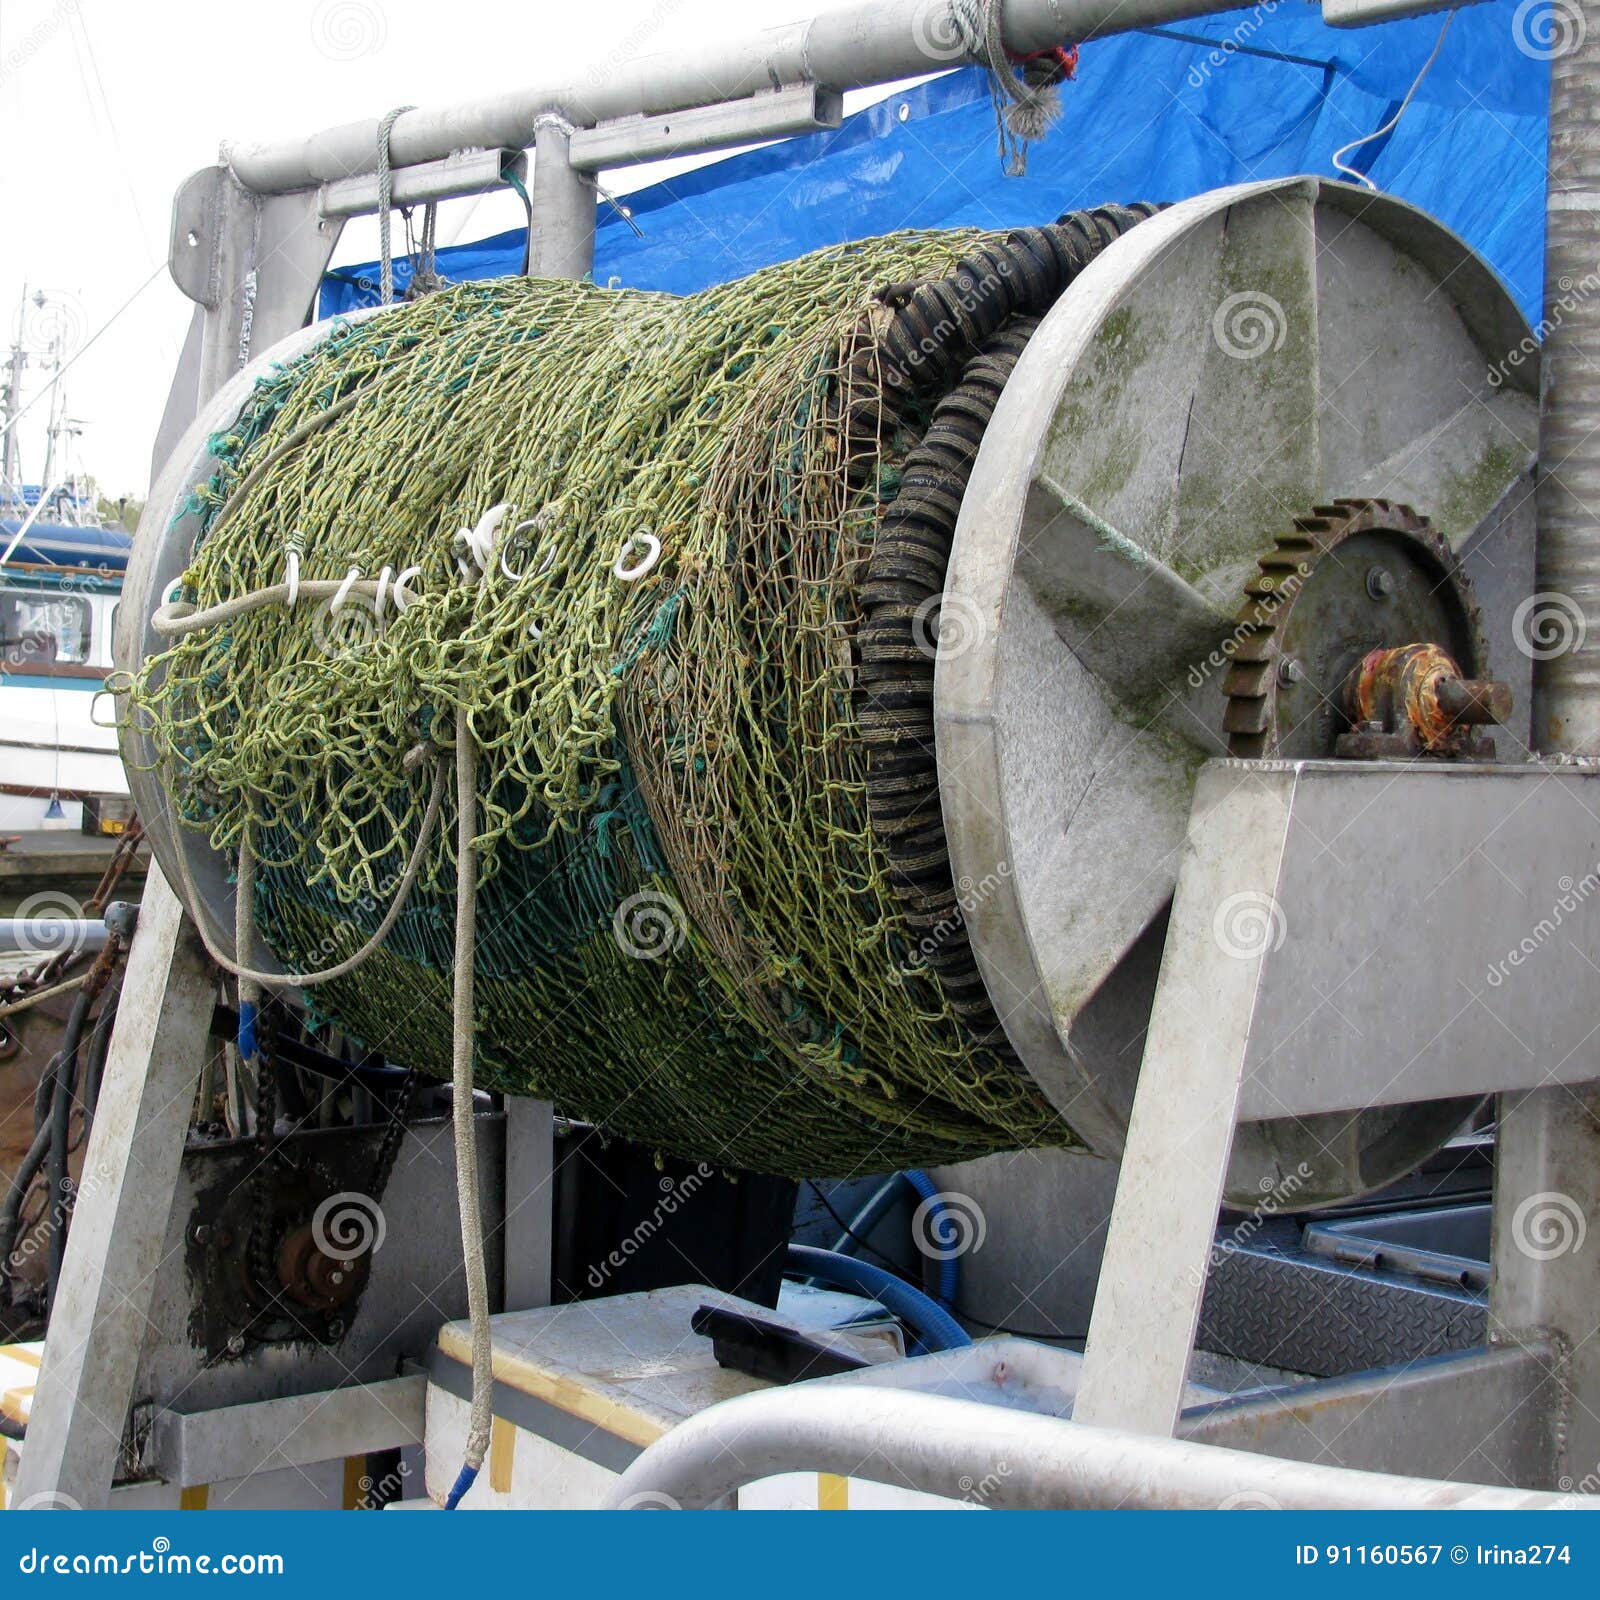 Purse Seine Fishing Net on Reel. Stock Image - Image of boat